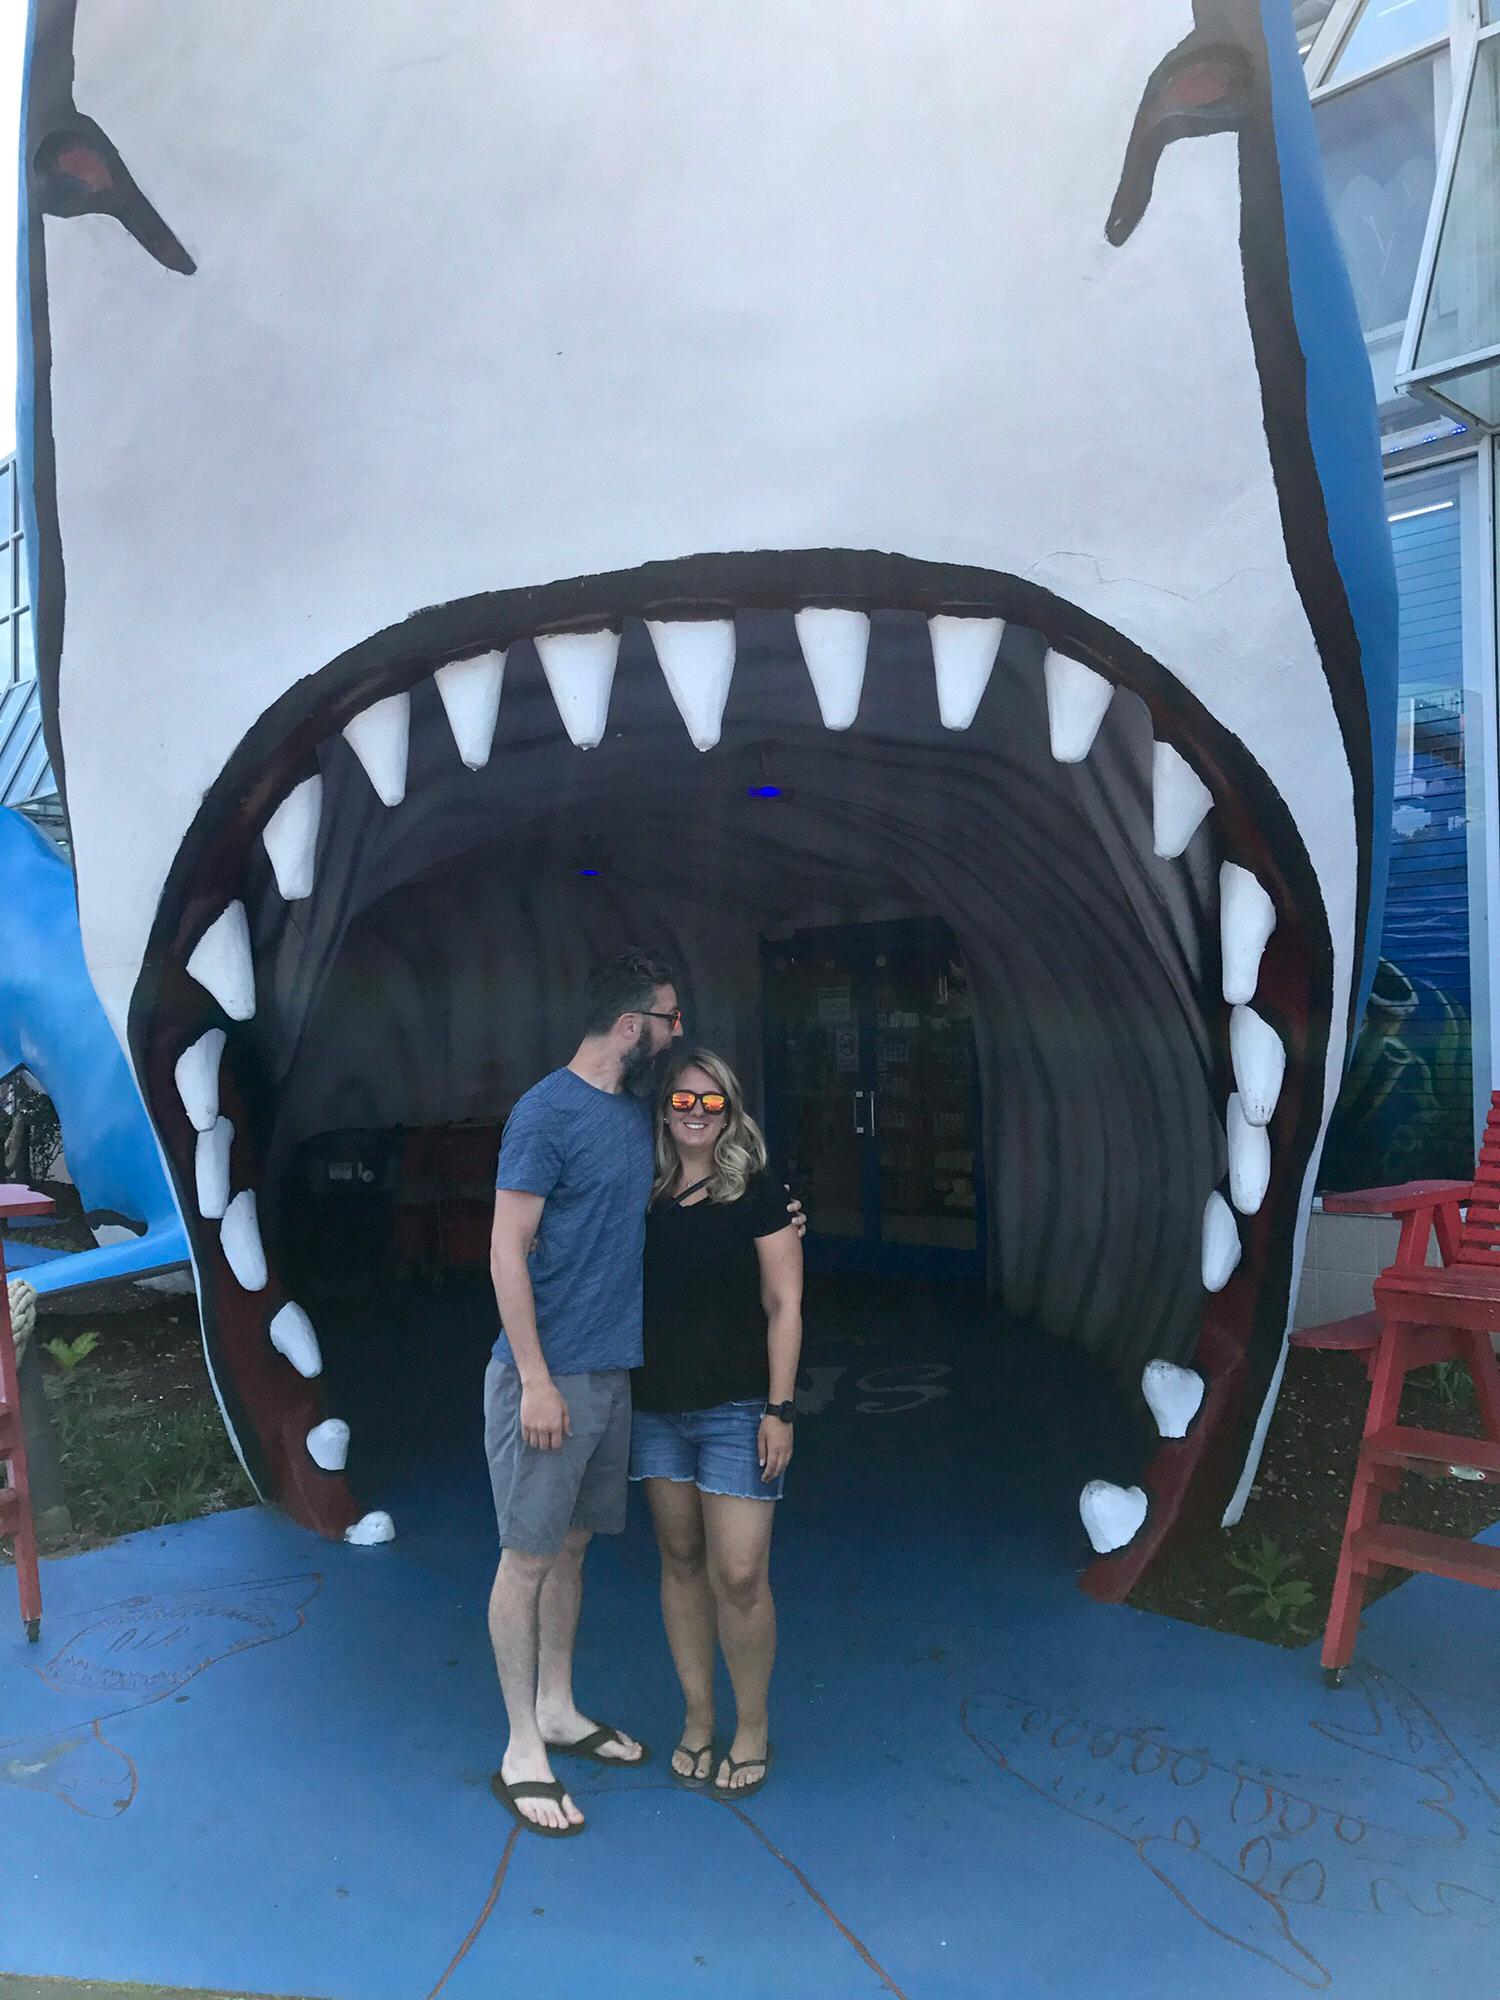 Shark bait in Myrtle Beach, SC - July 2018